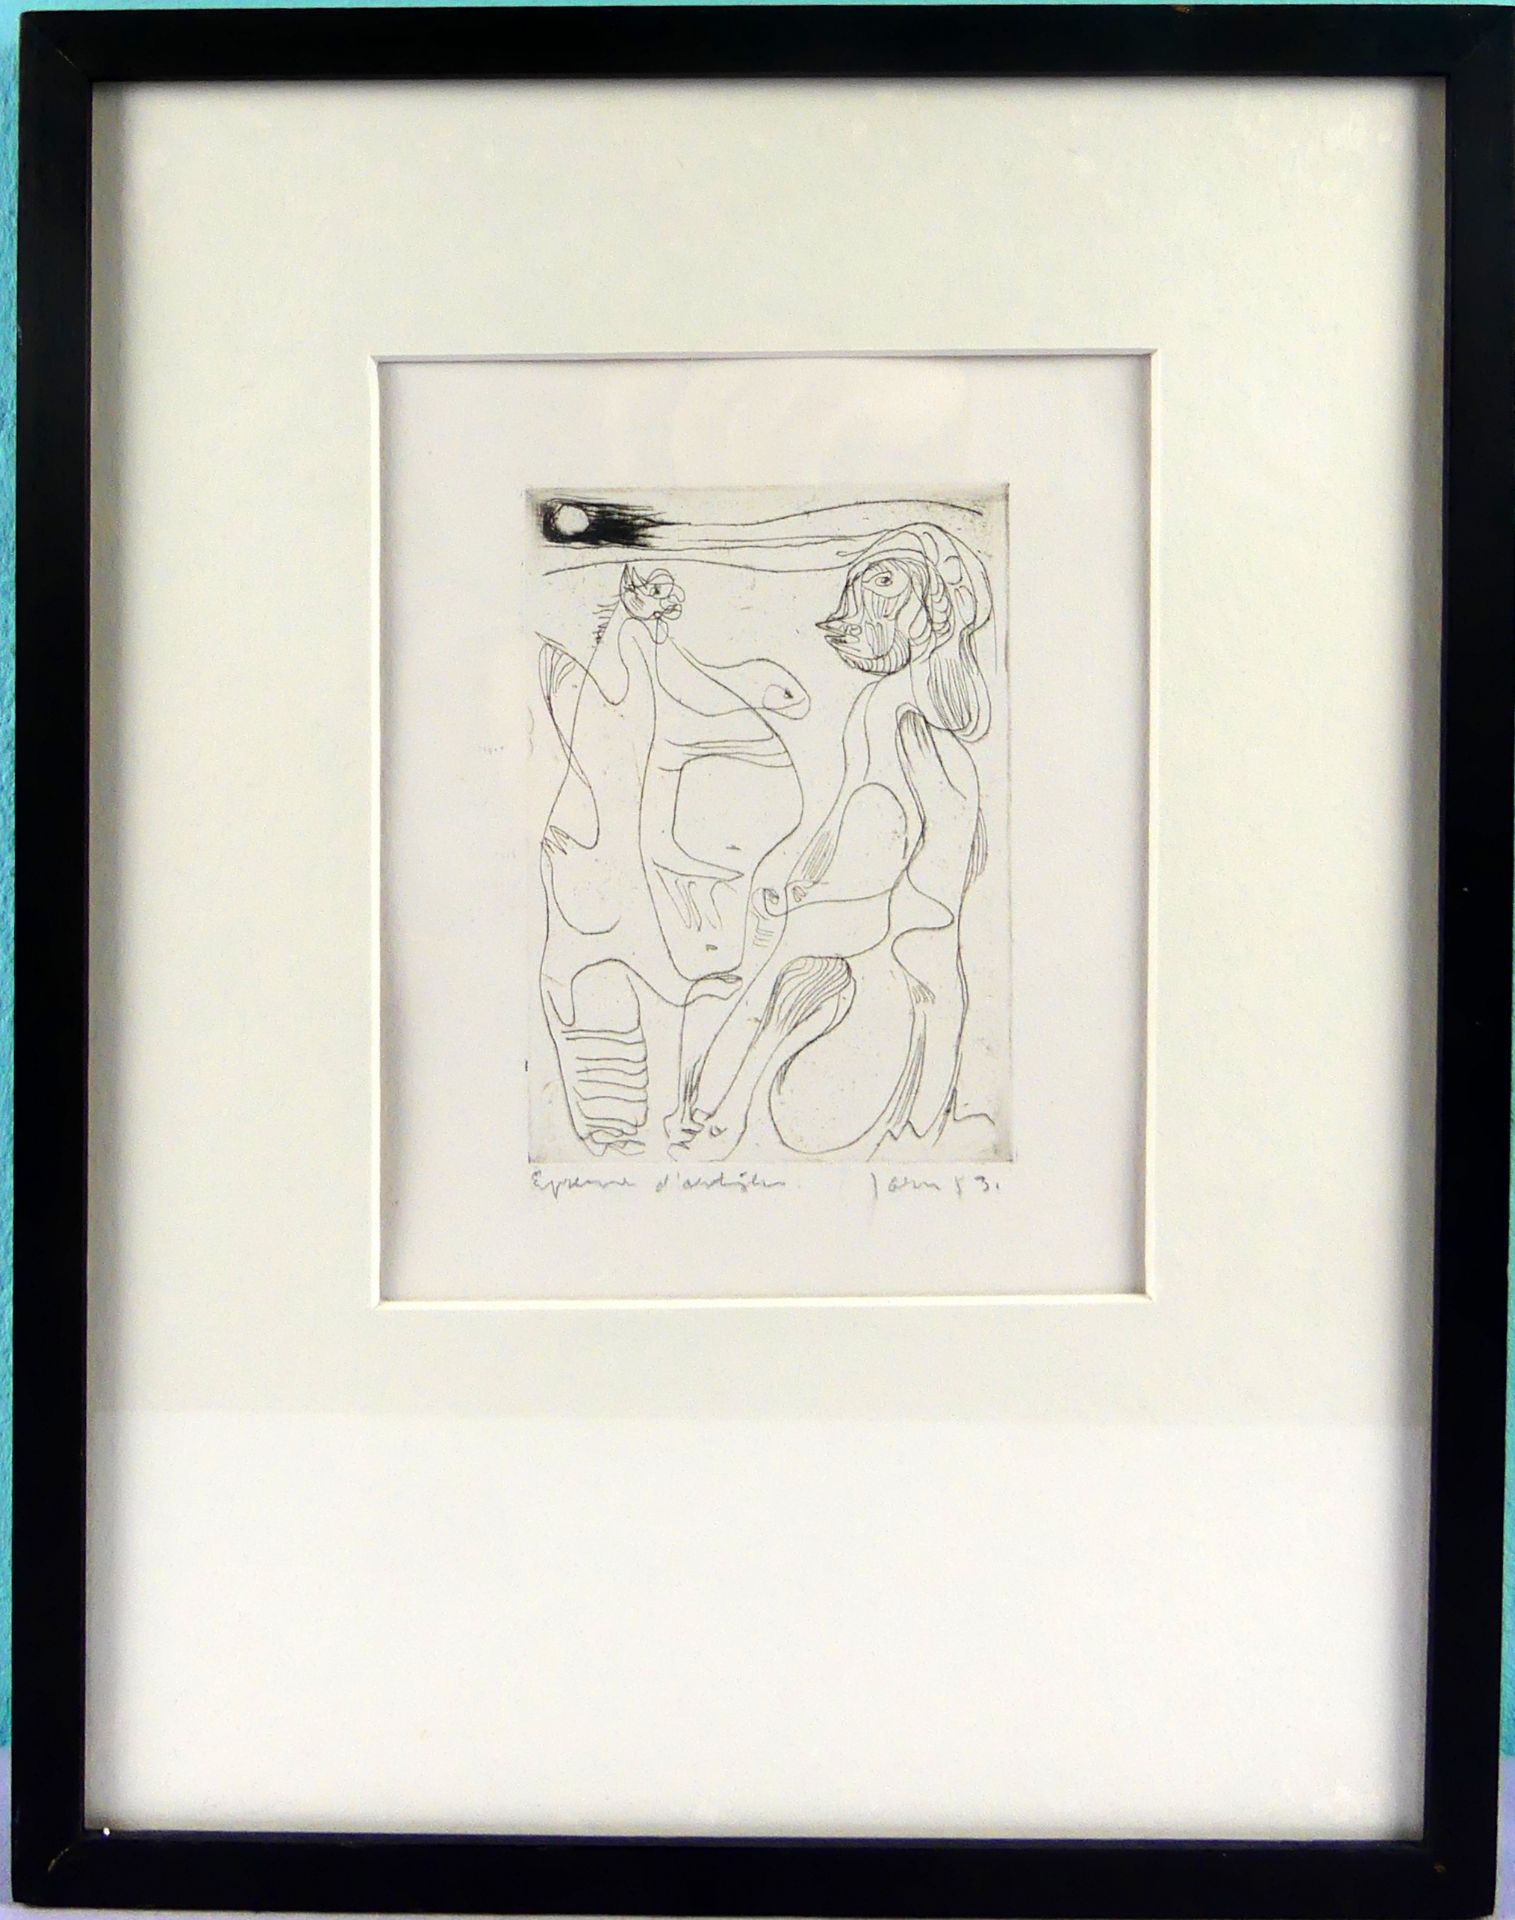 ASGER JORN (1914-1973), "Abstrakte Figuren", Radierung,